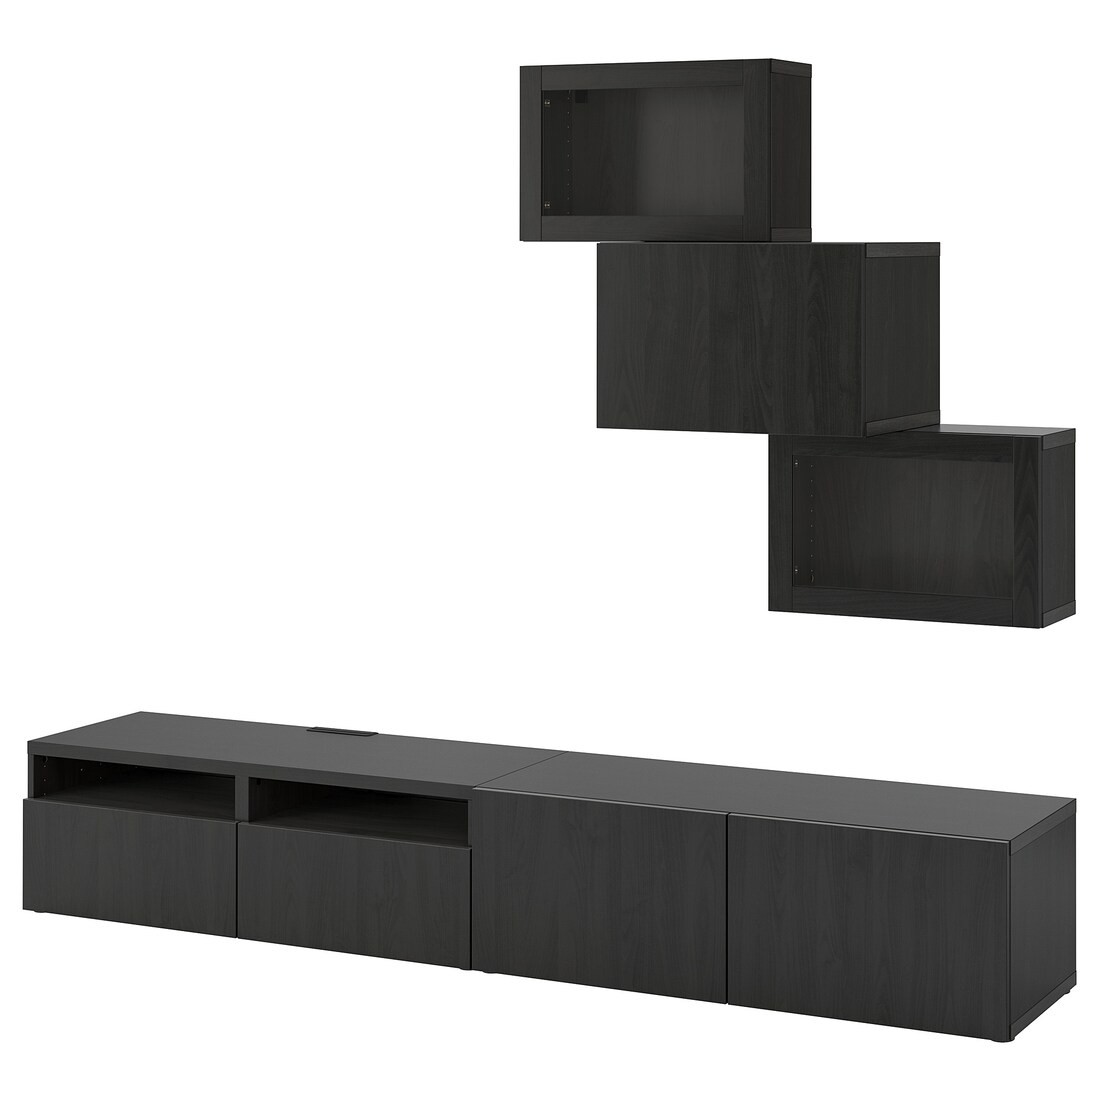 IKEA BESTÅ БЕСТО Комбинация для ТВ / стеклянные двери, черно-коричневый / Lappviken черно-коричневое прозрачное стекло, 240x42x190 см 99411314 | 994.113.14